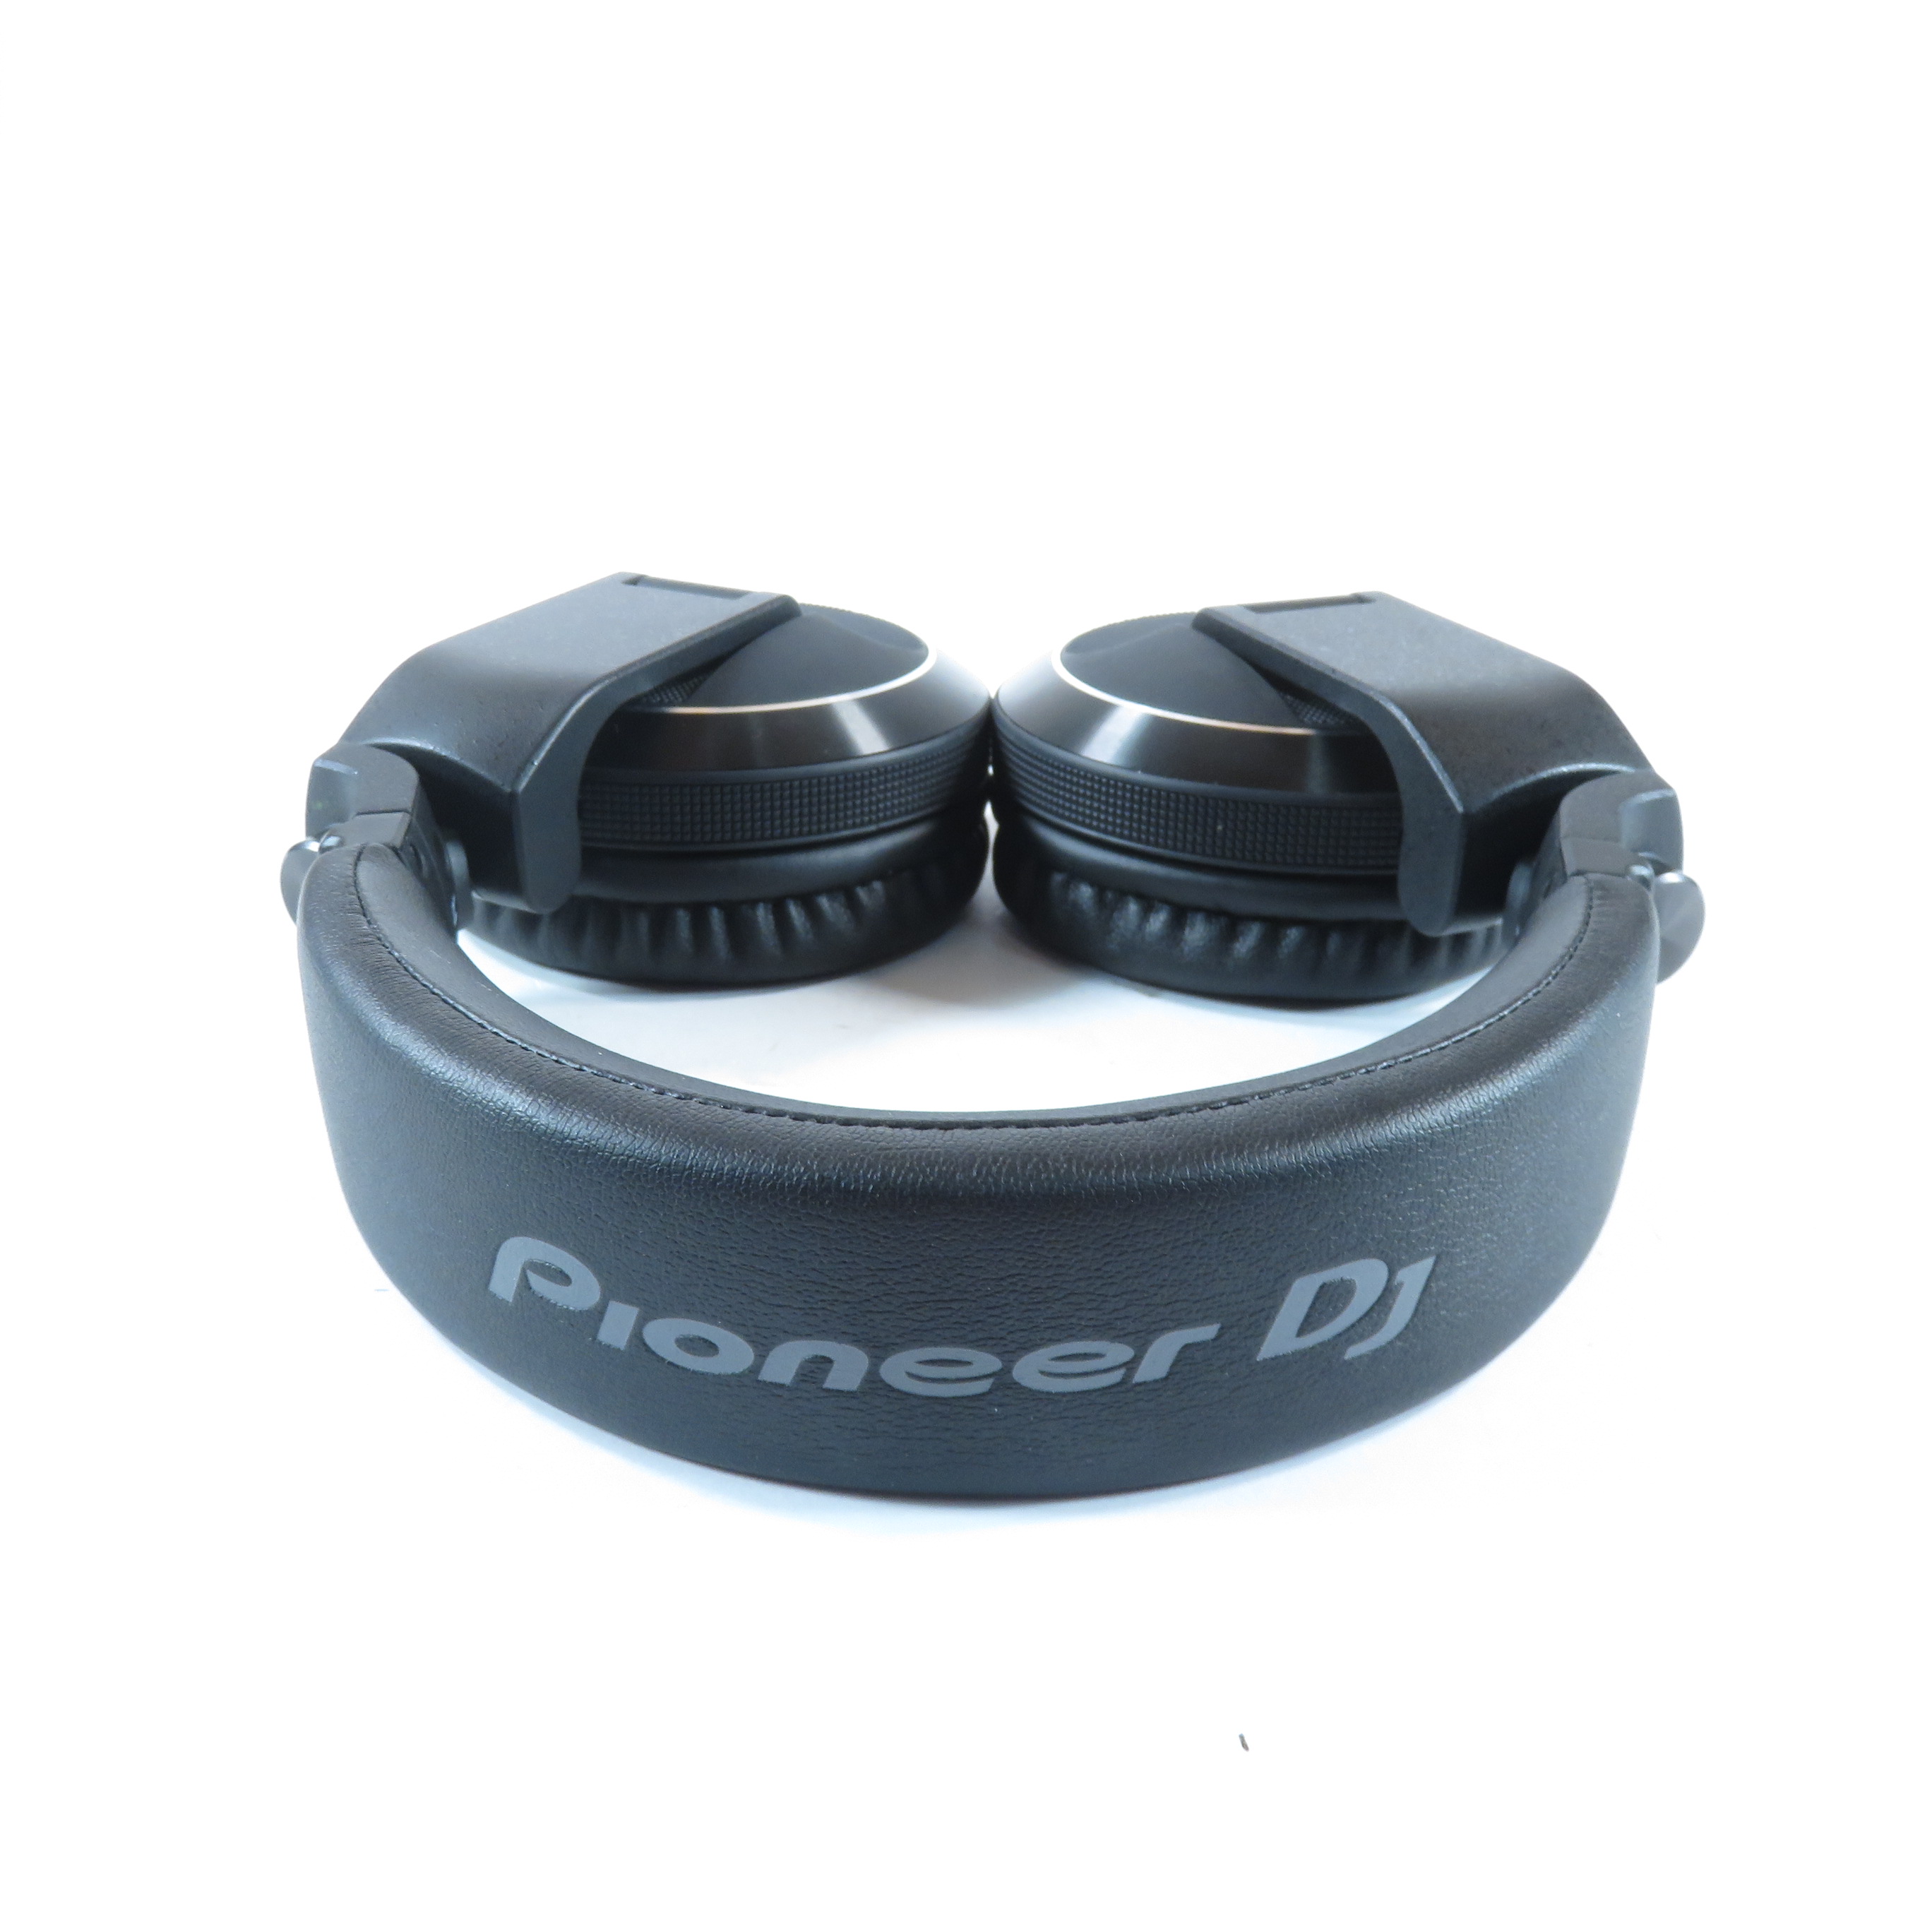 Buy Pioneer DJ HDJ-X7 Professional Over-Ear DJ Headphones